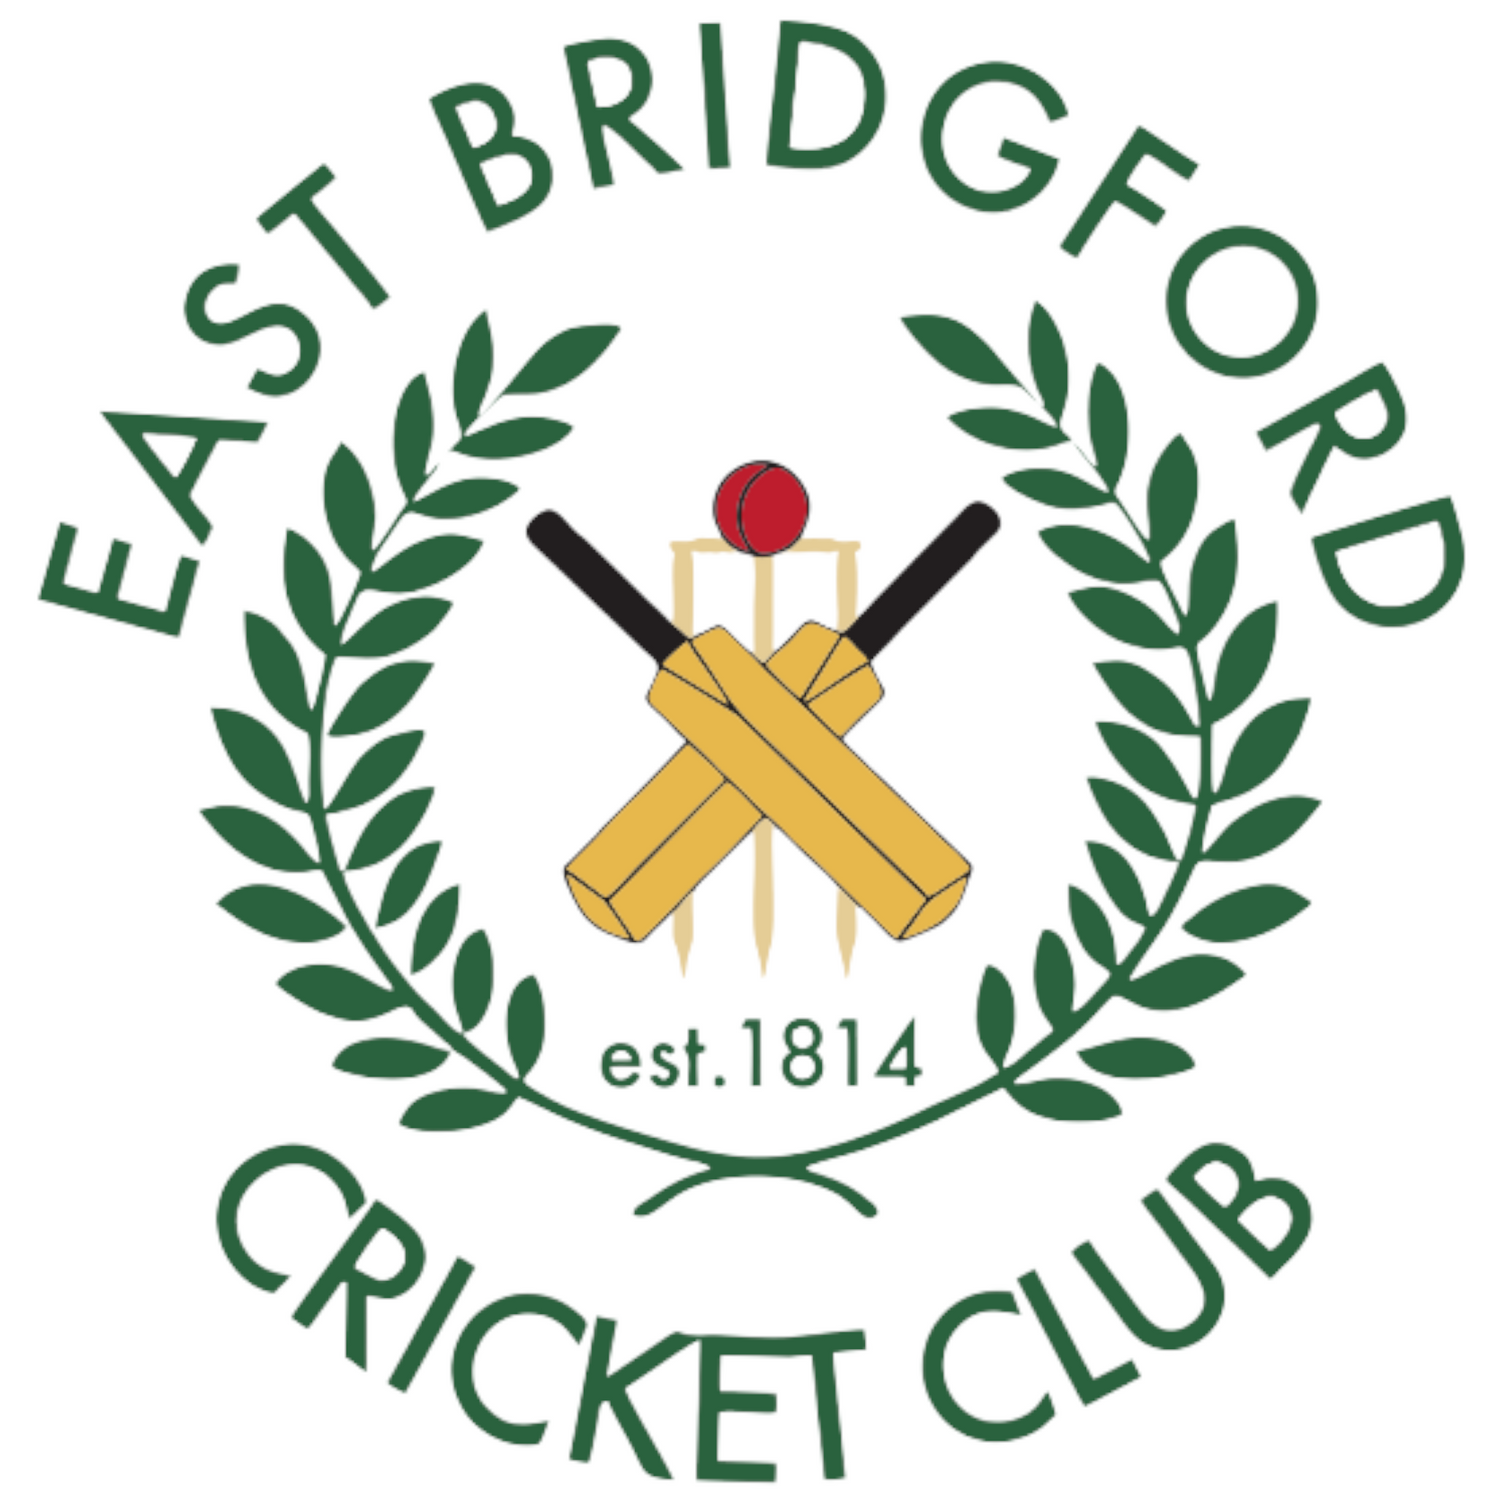 East Bridgford CC